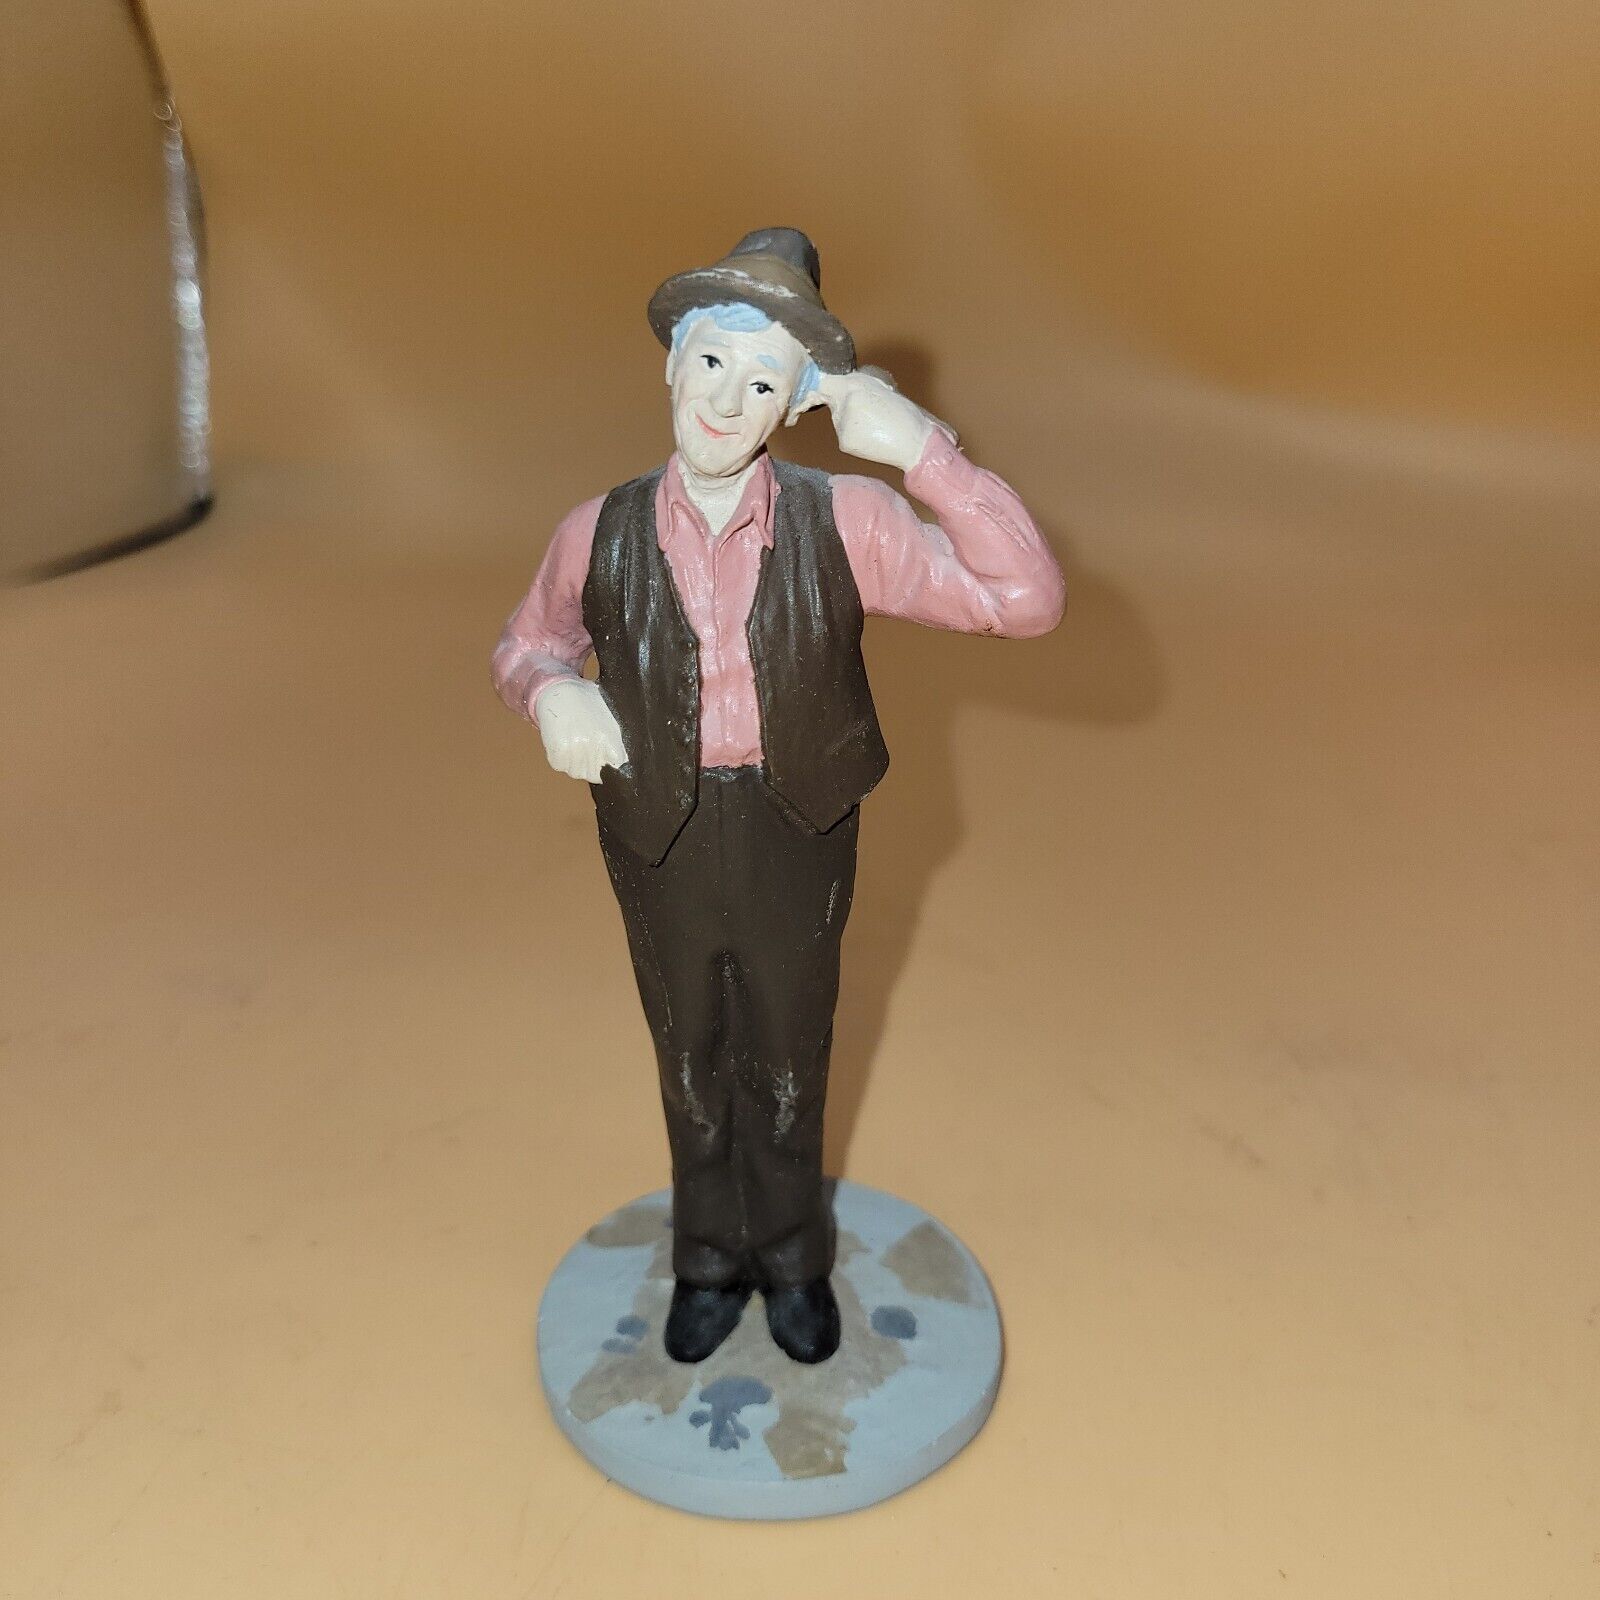 Vintage 1988 Franklin Mint Wizard of Oz Figurine Uncle Henry